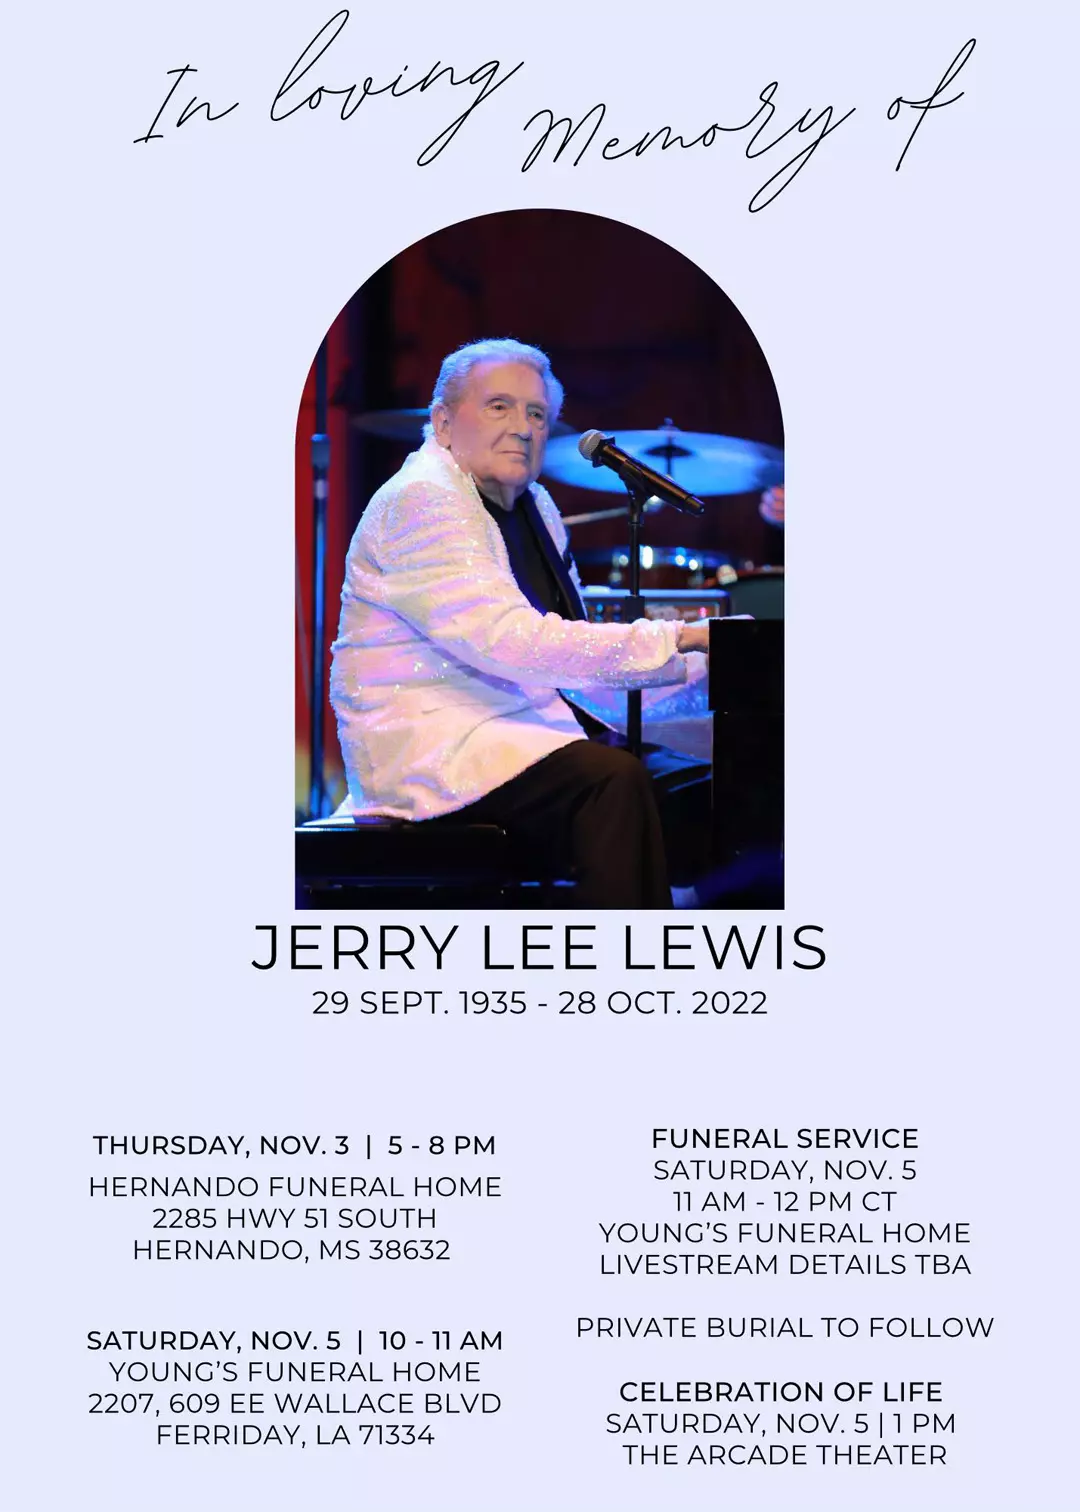 Jerry Lee Lewis' Funeral, Public Memorial Announced